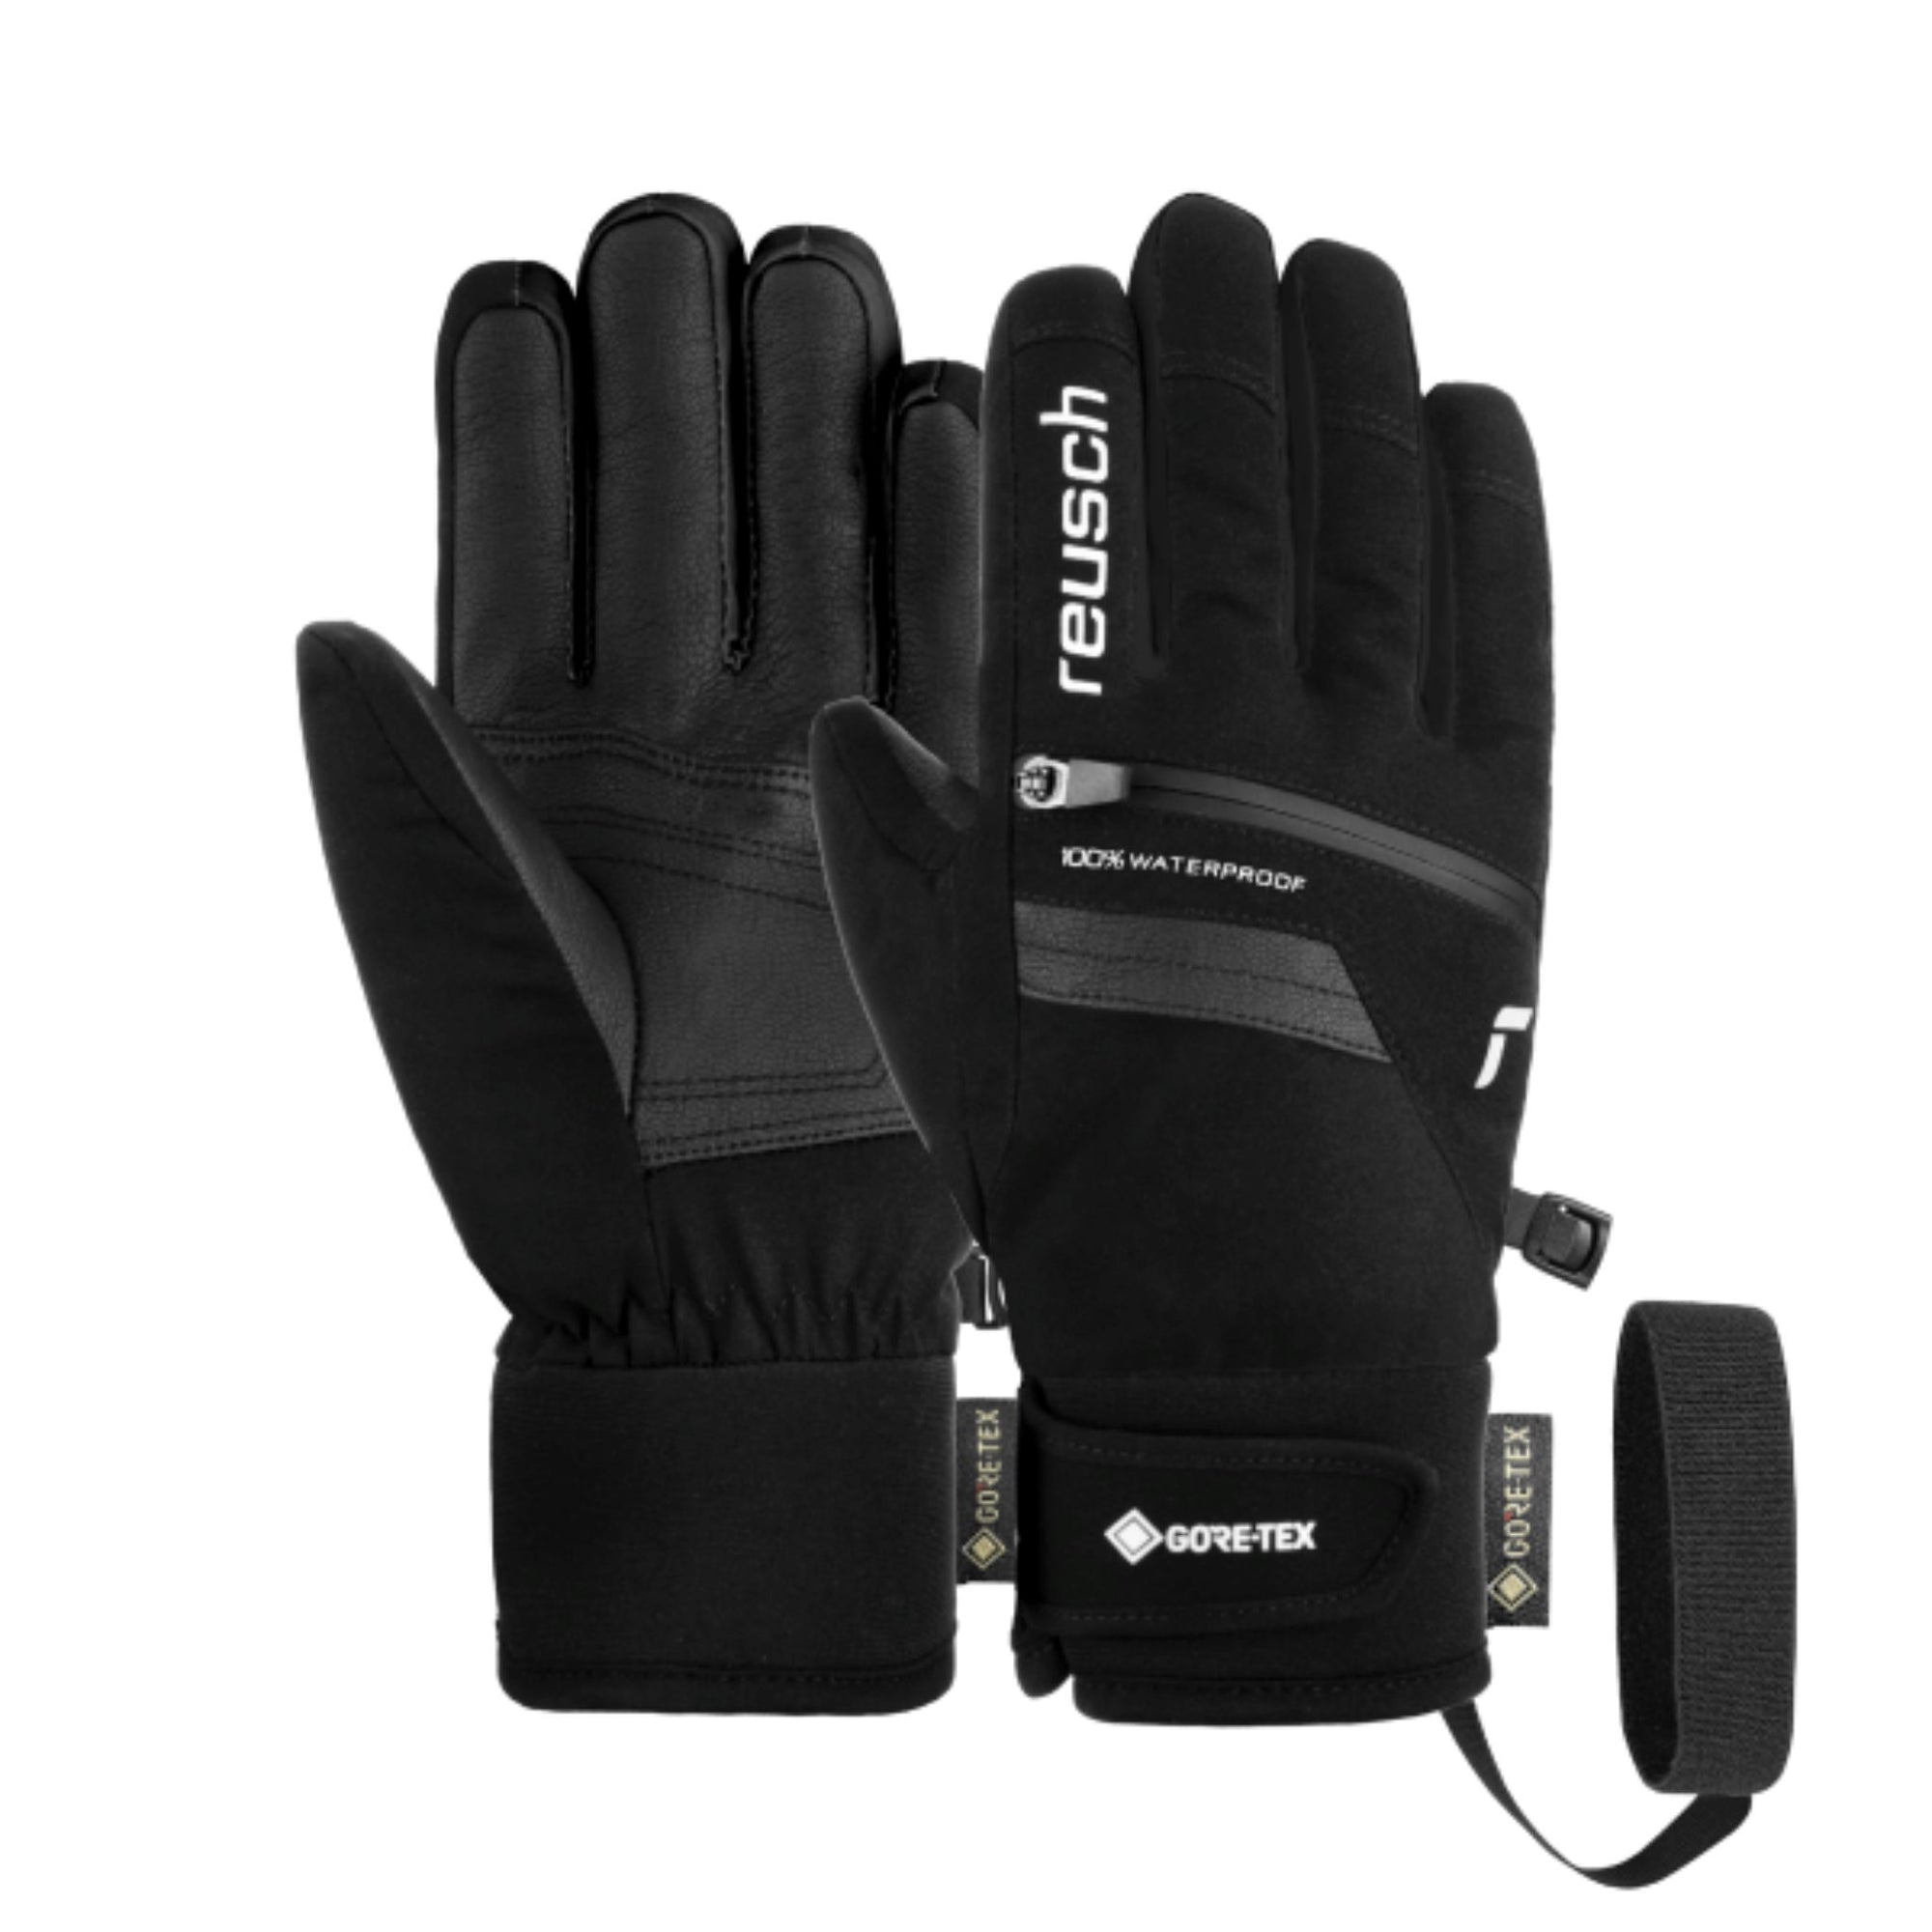 Kids Reusch Travis GORE-TEX Glove - Black/Silver Gloves | Mittens Reusch S / 5.0 